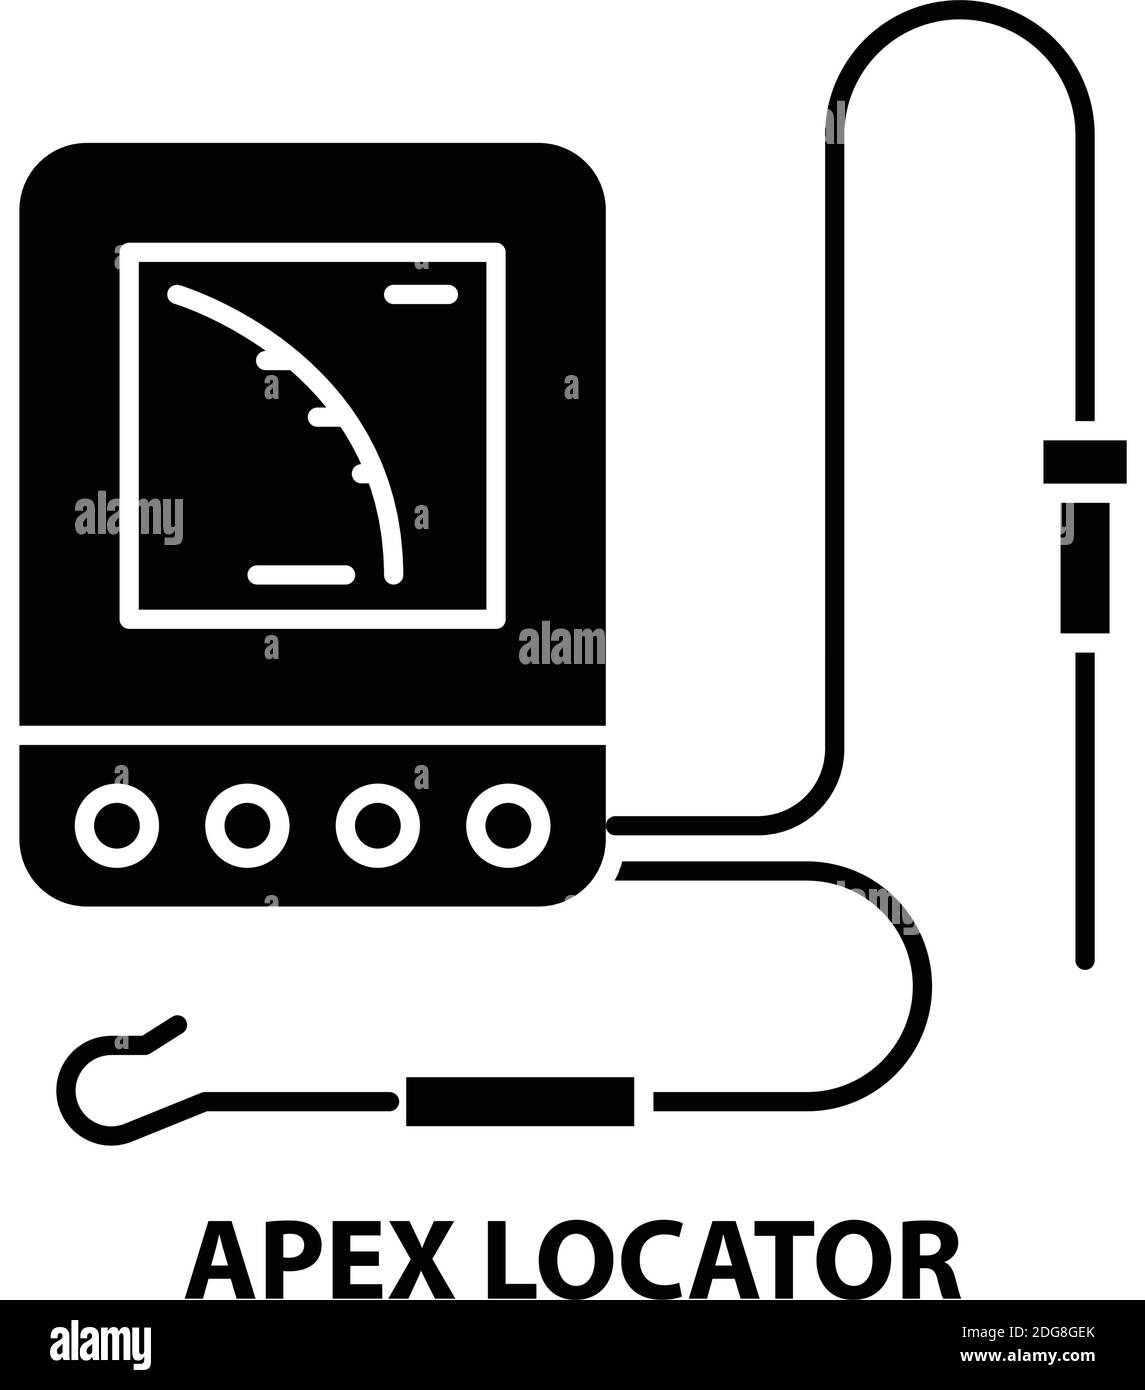 apex locator icon, black vector sign with editable strokes, concept illustration Stock Vector